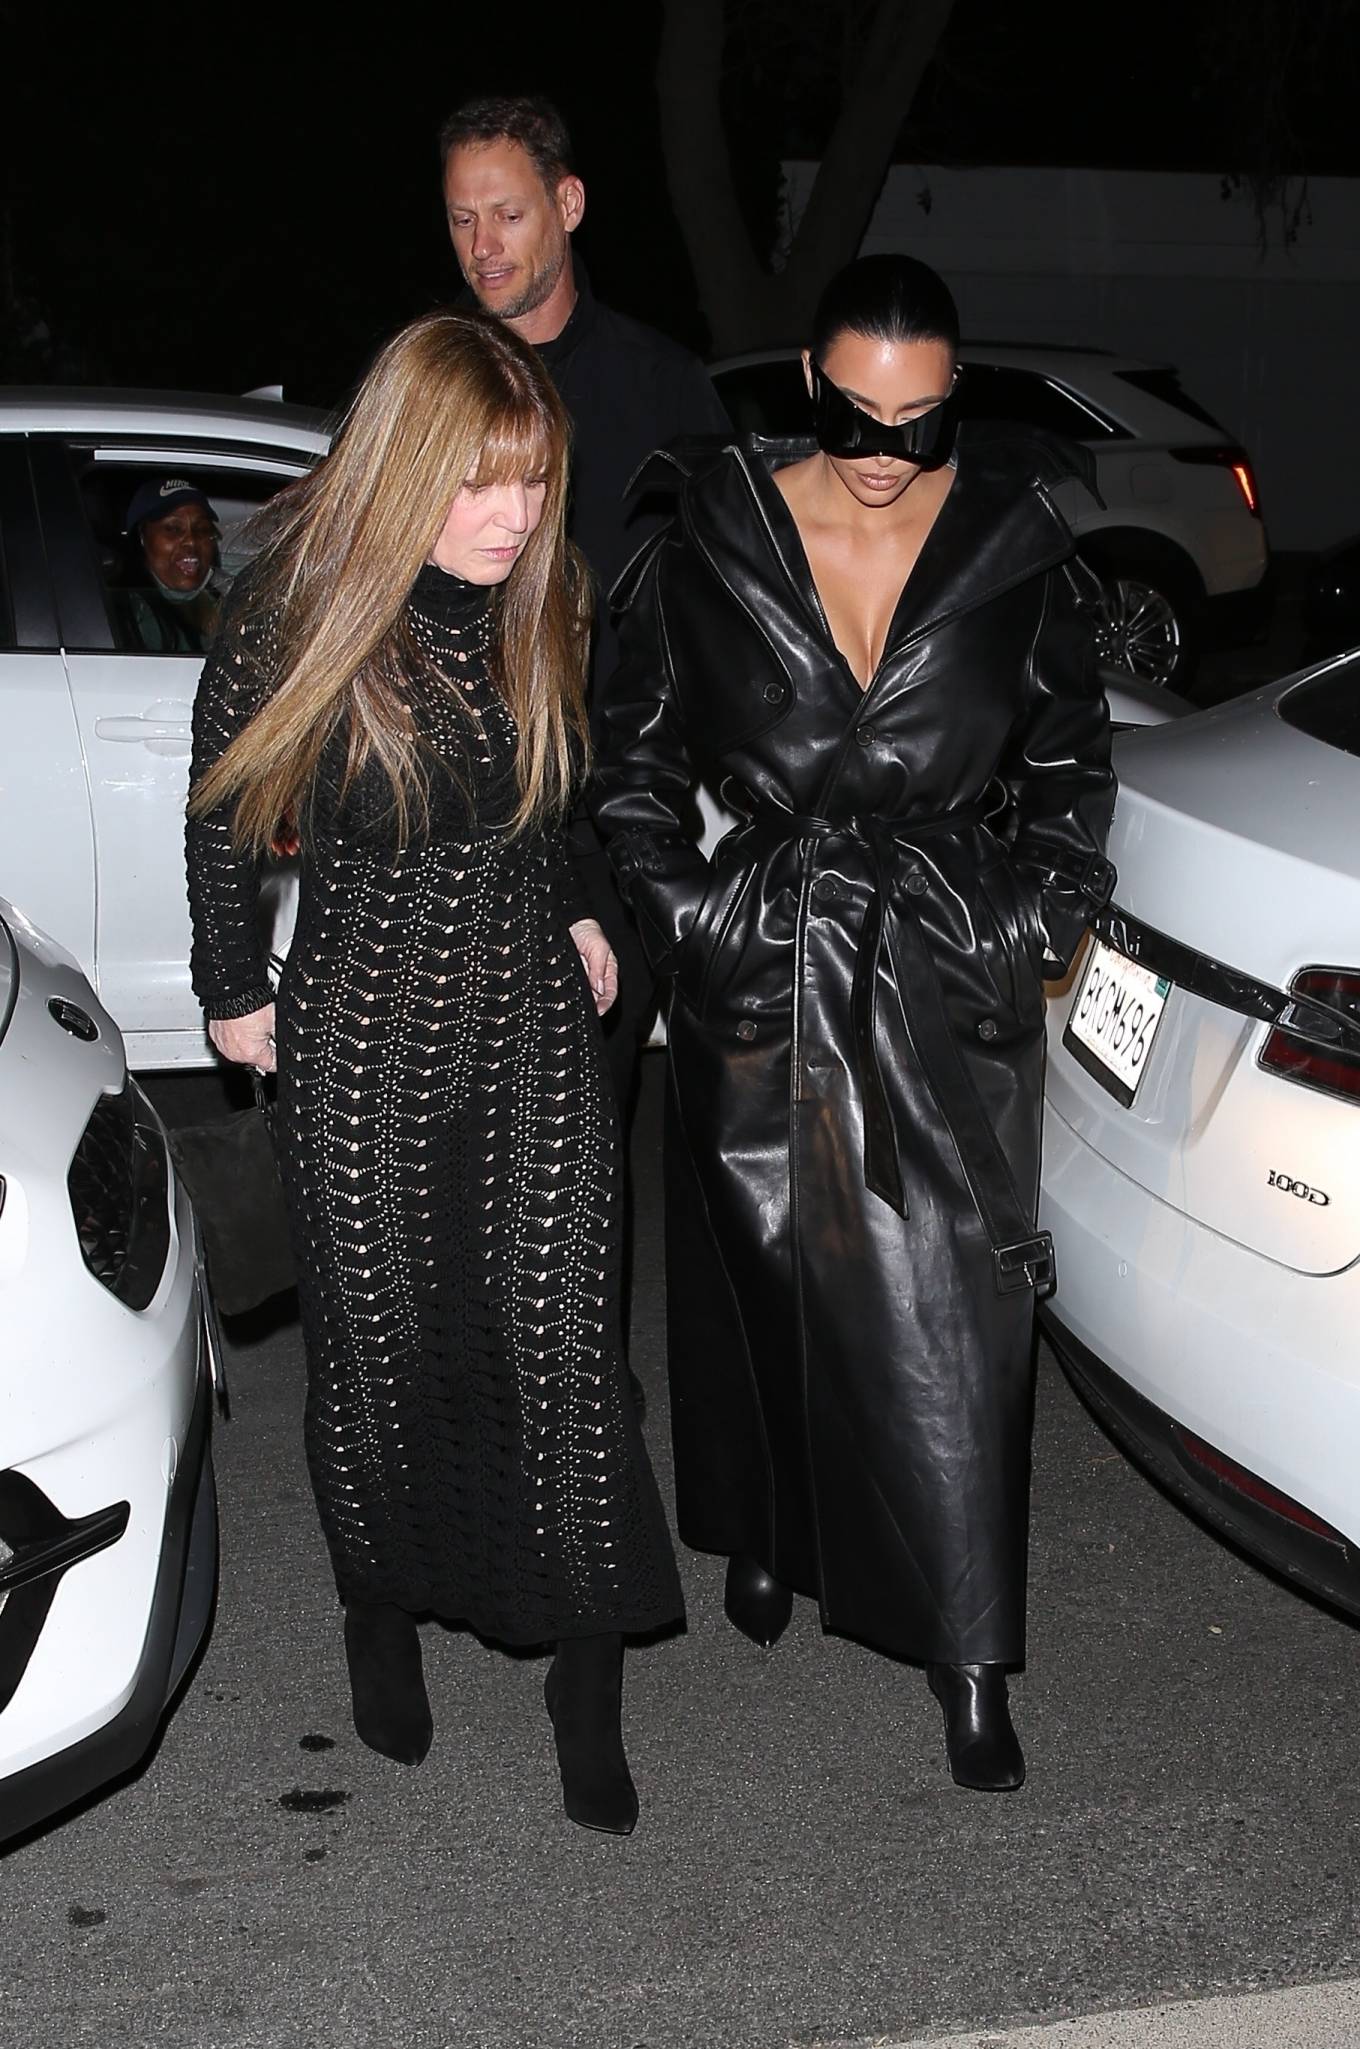 Kim Kardashian - Wears a domino mask to David Kordansky's art gallery event in Beverly Hills